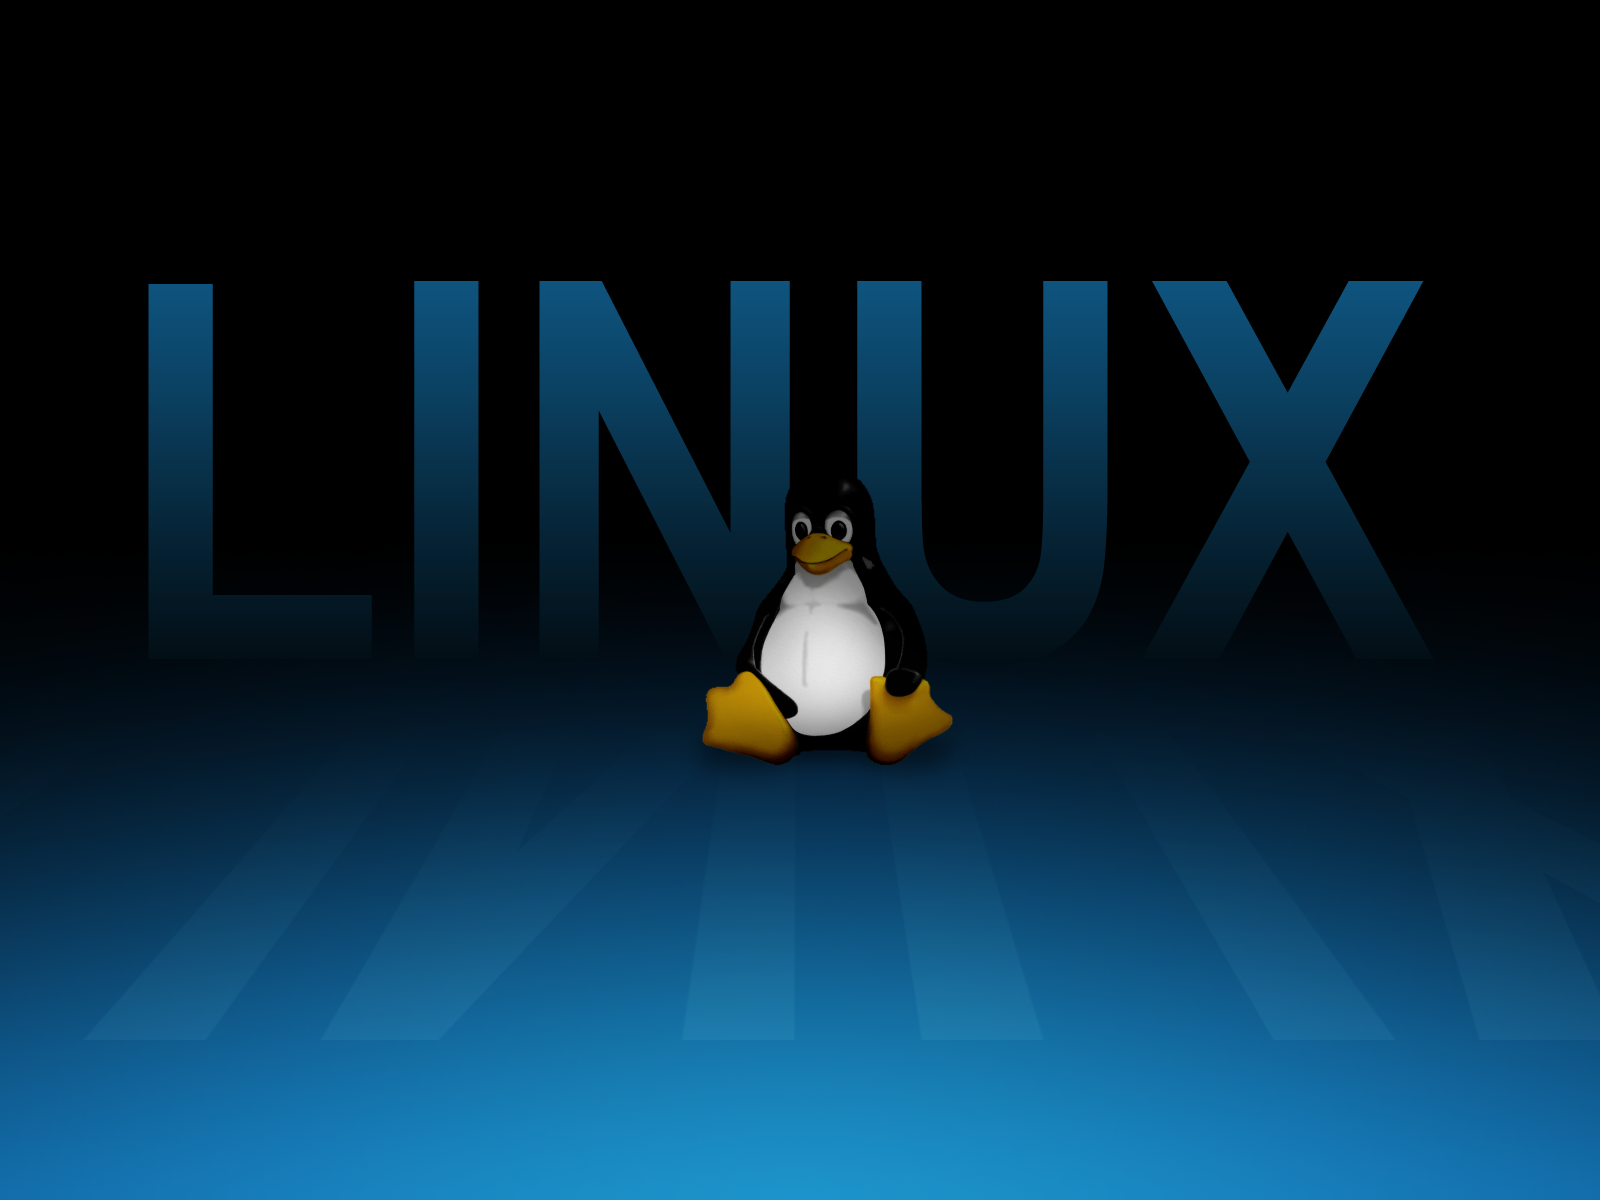 Wallpaper Designs Featuring The Linux Mascot Stylishpics